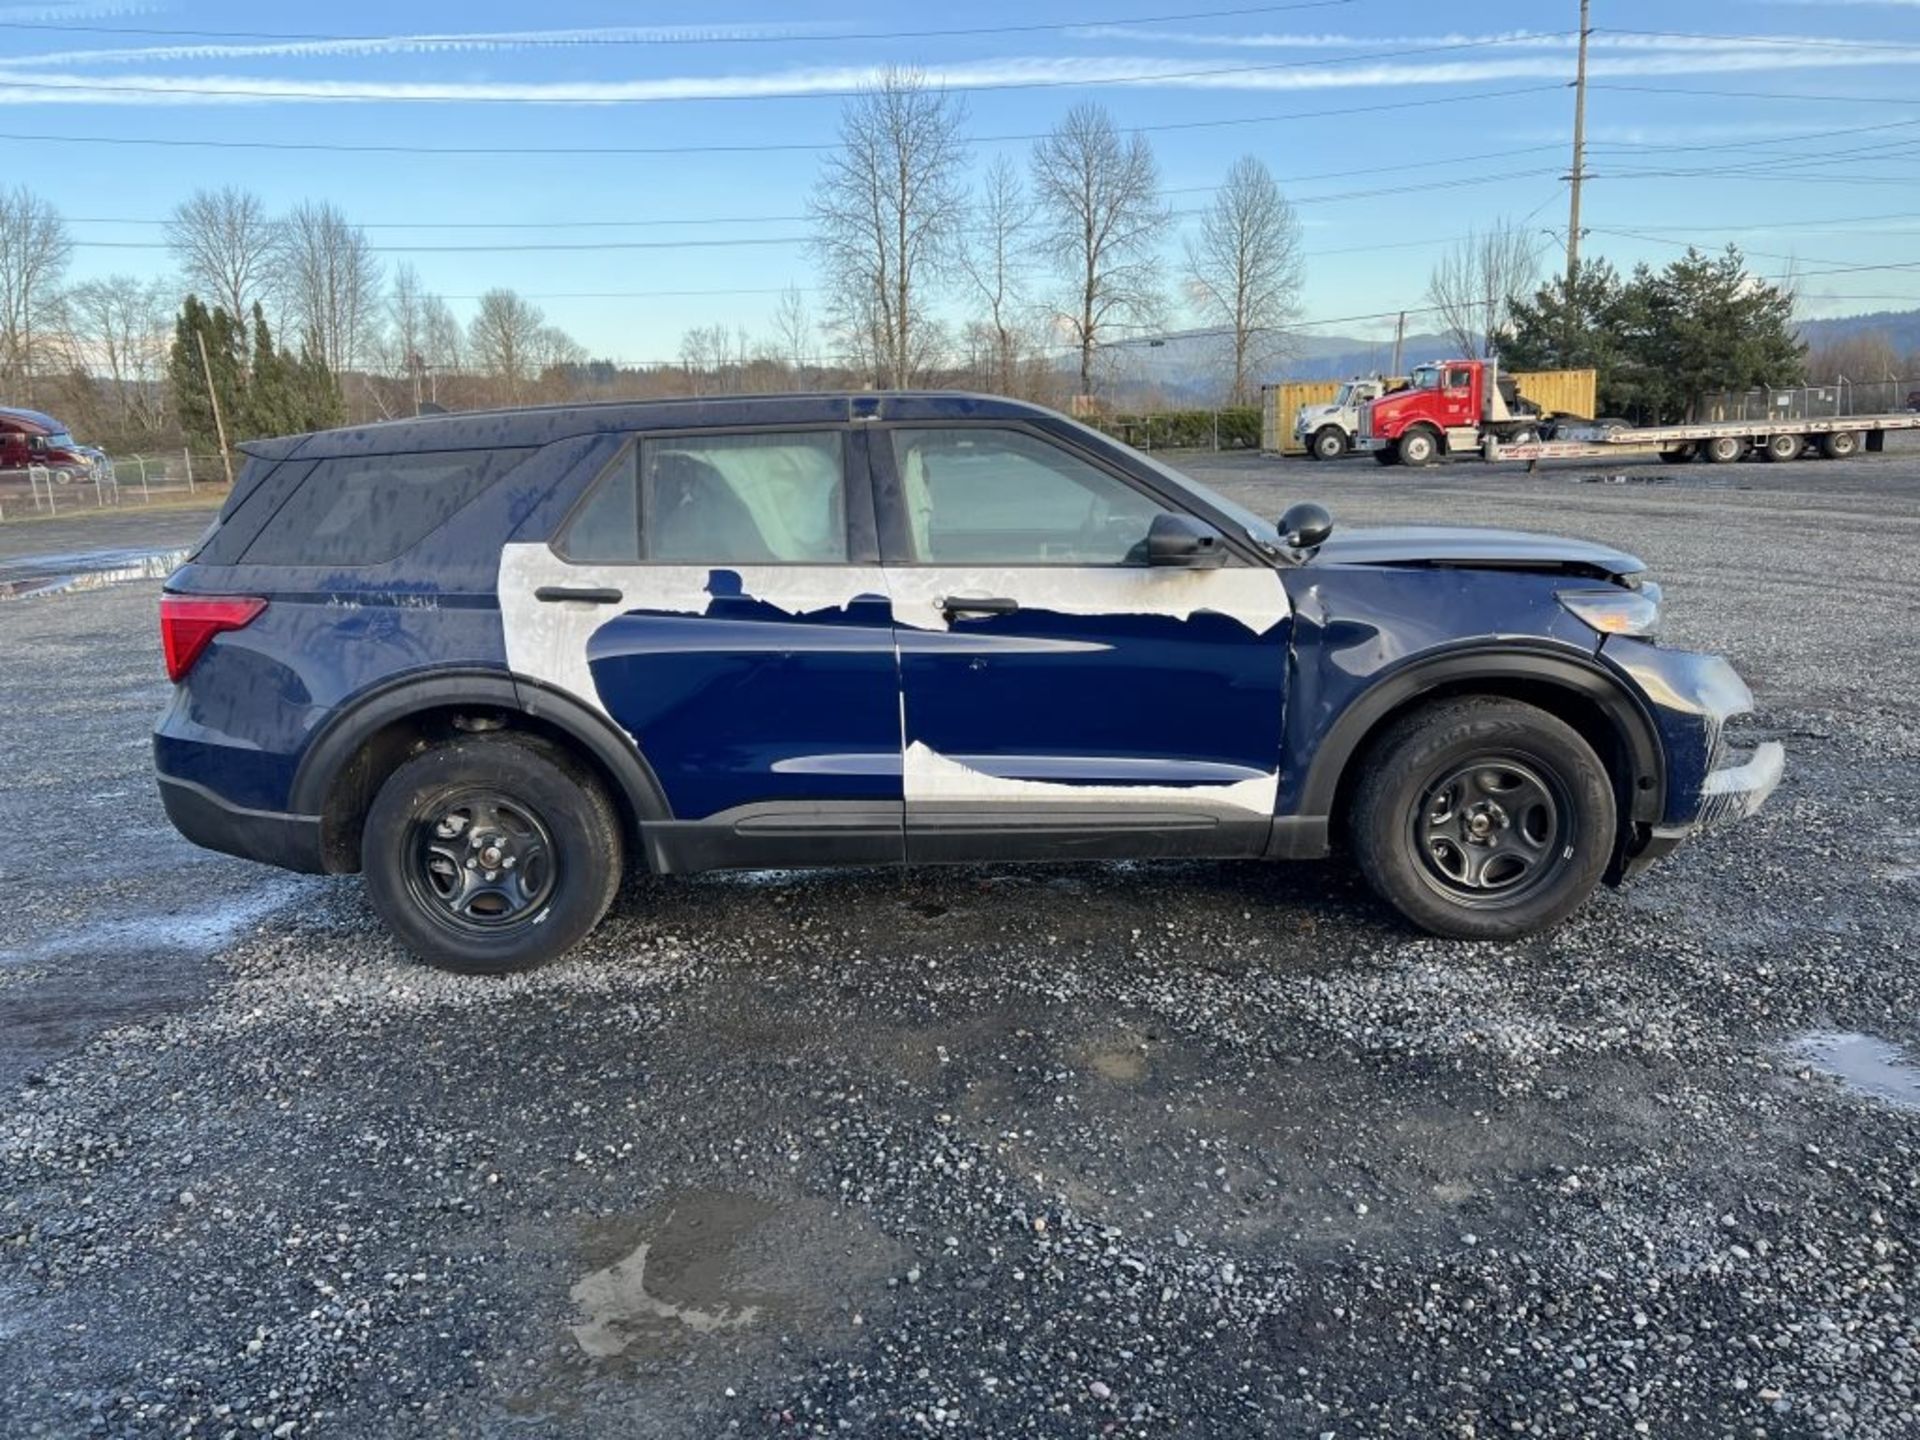 2020 Ford Explorer AWD Hybrid SUV - Image 3 of 18